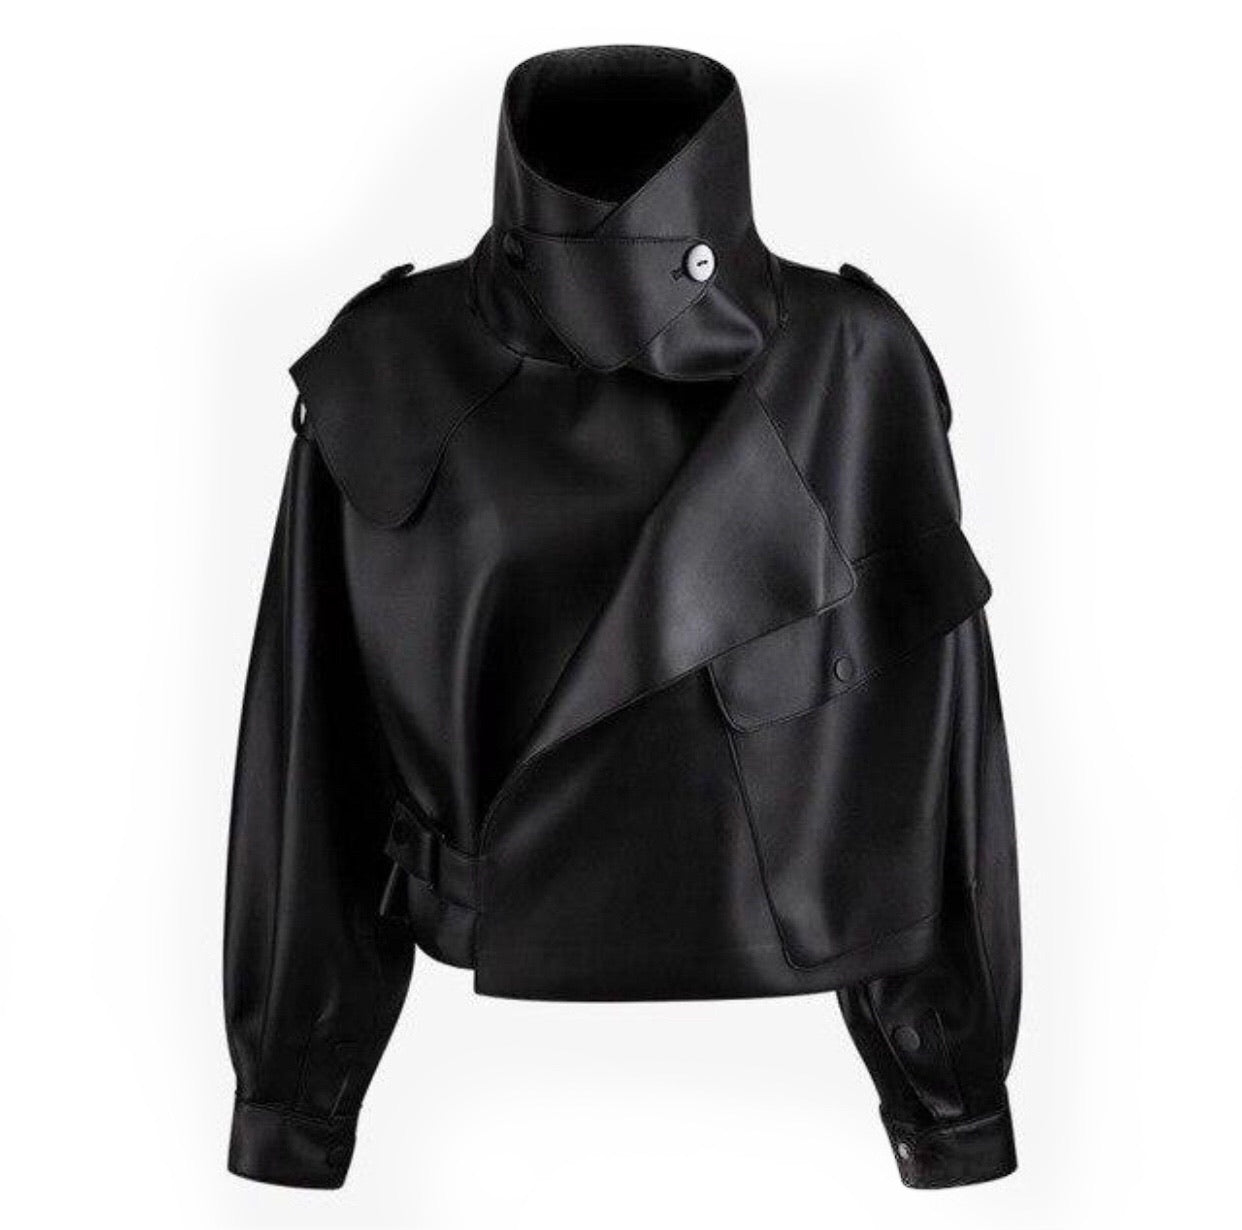 Oversized Turn Down High Neck Collar Black Vegan Leather Jacket